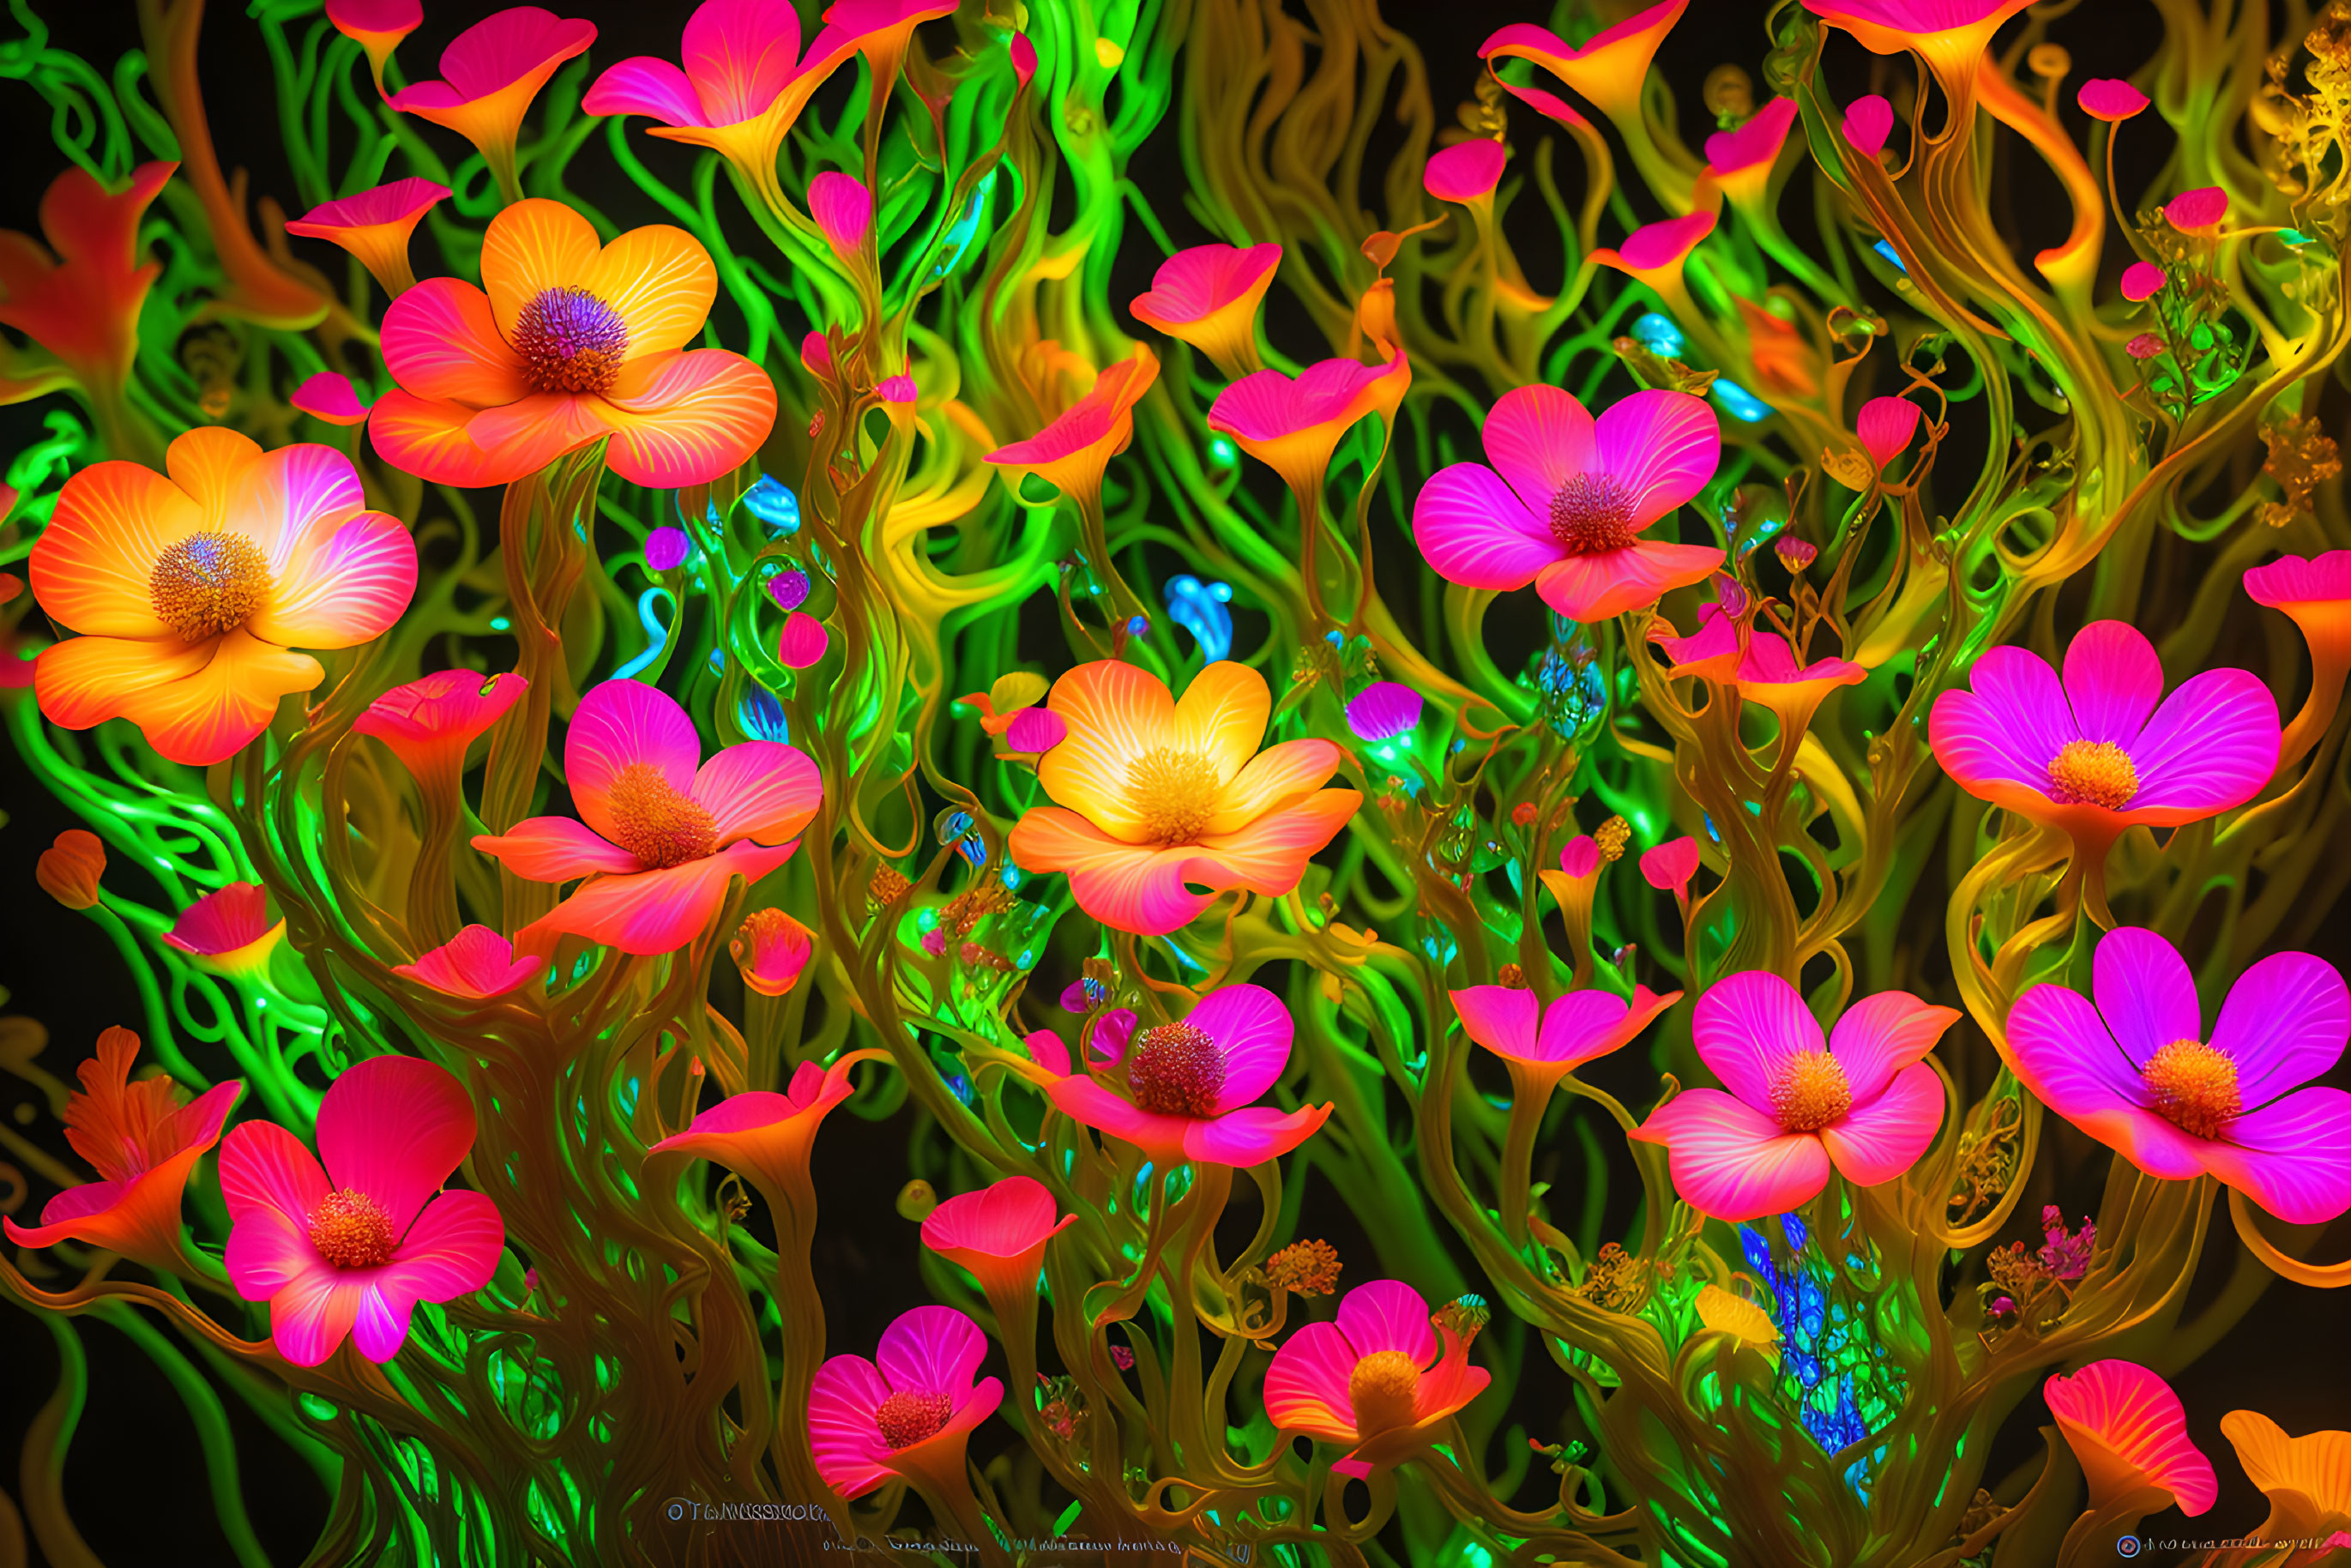 Neon Glowing Flowers in Luminous Garden Scene